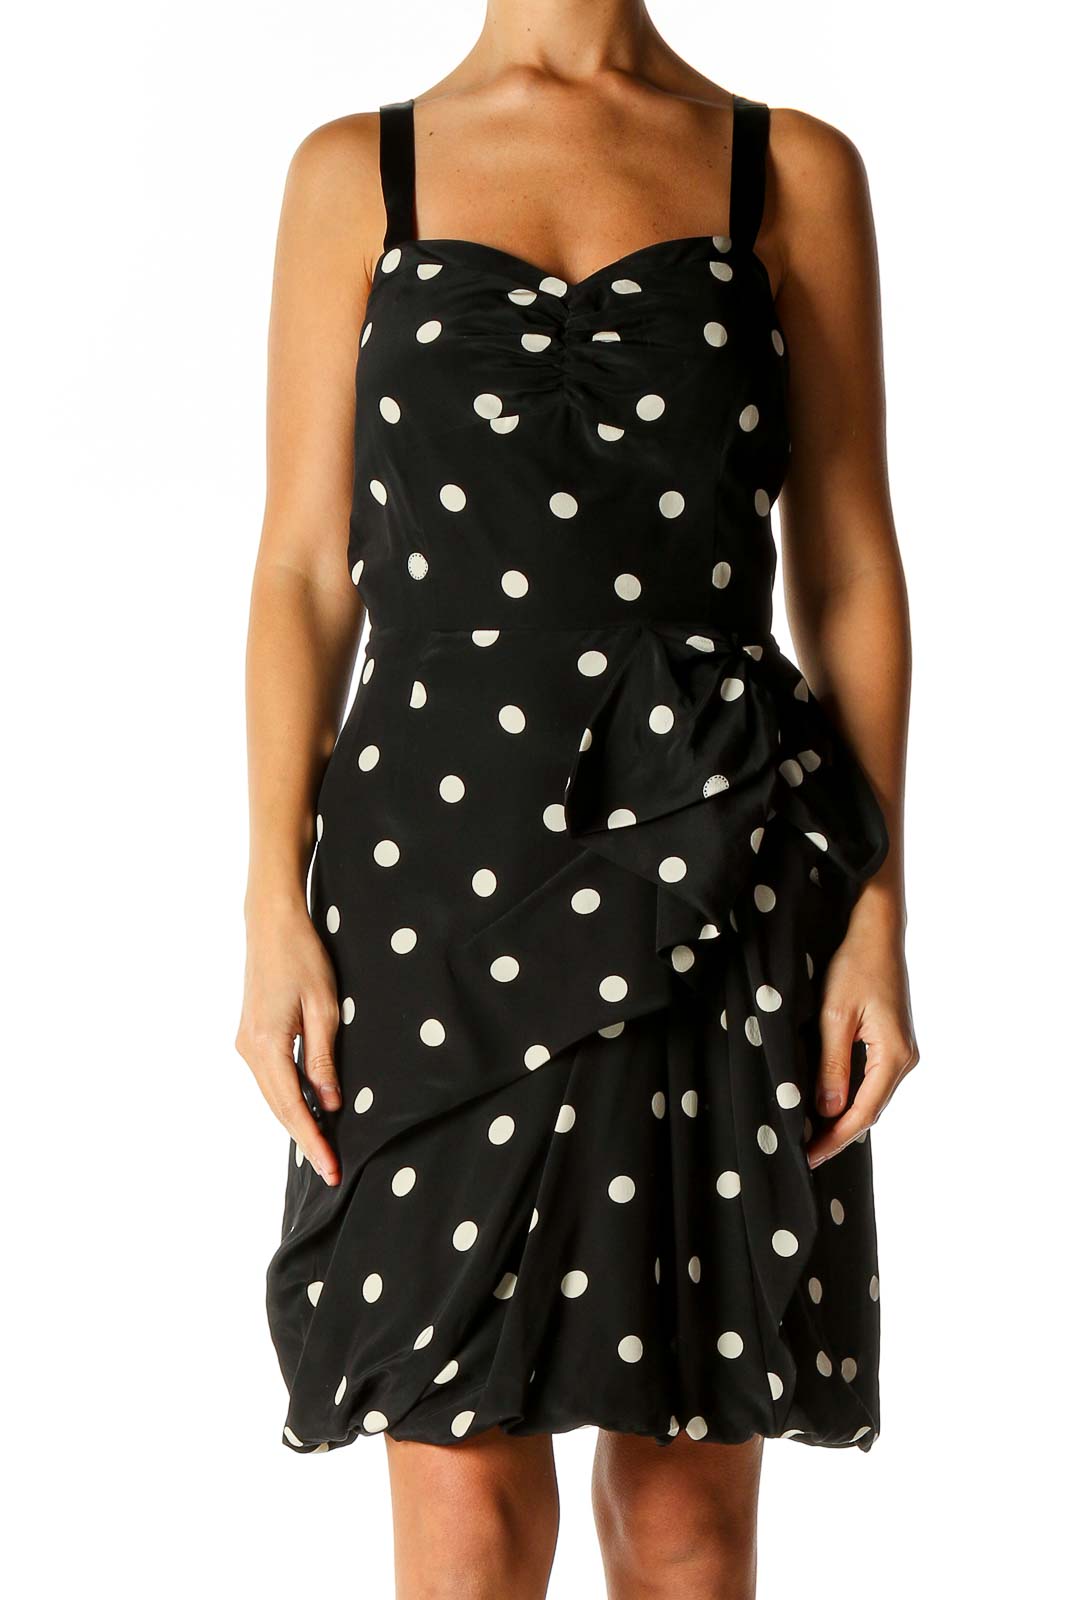 Black Polka Dot Retro A-Line Dress Front